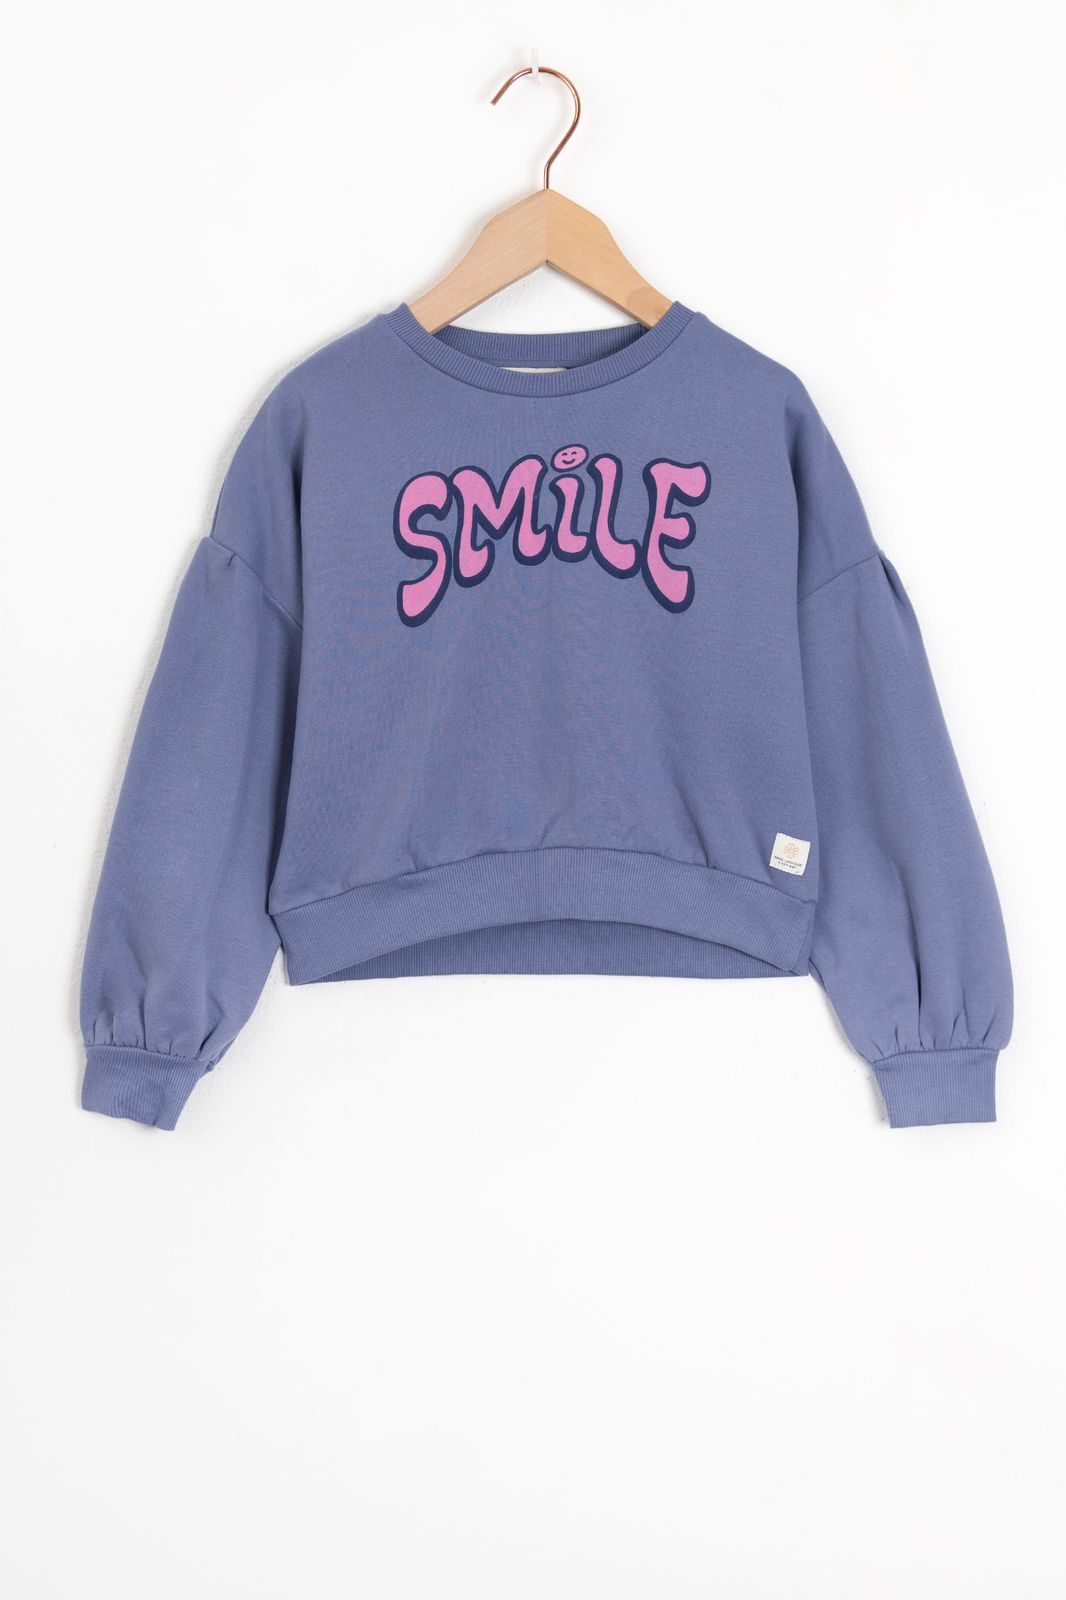 Sweater mit Smiley-Print - blau